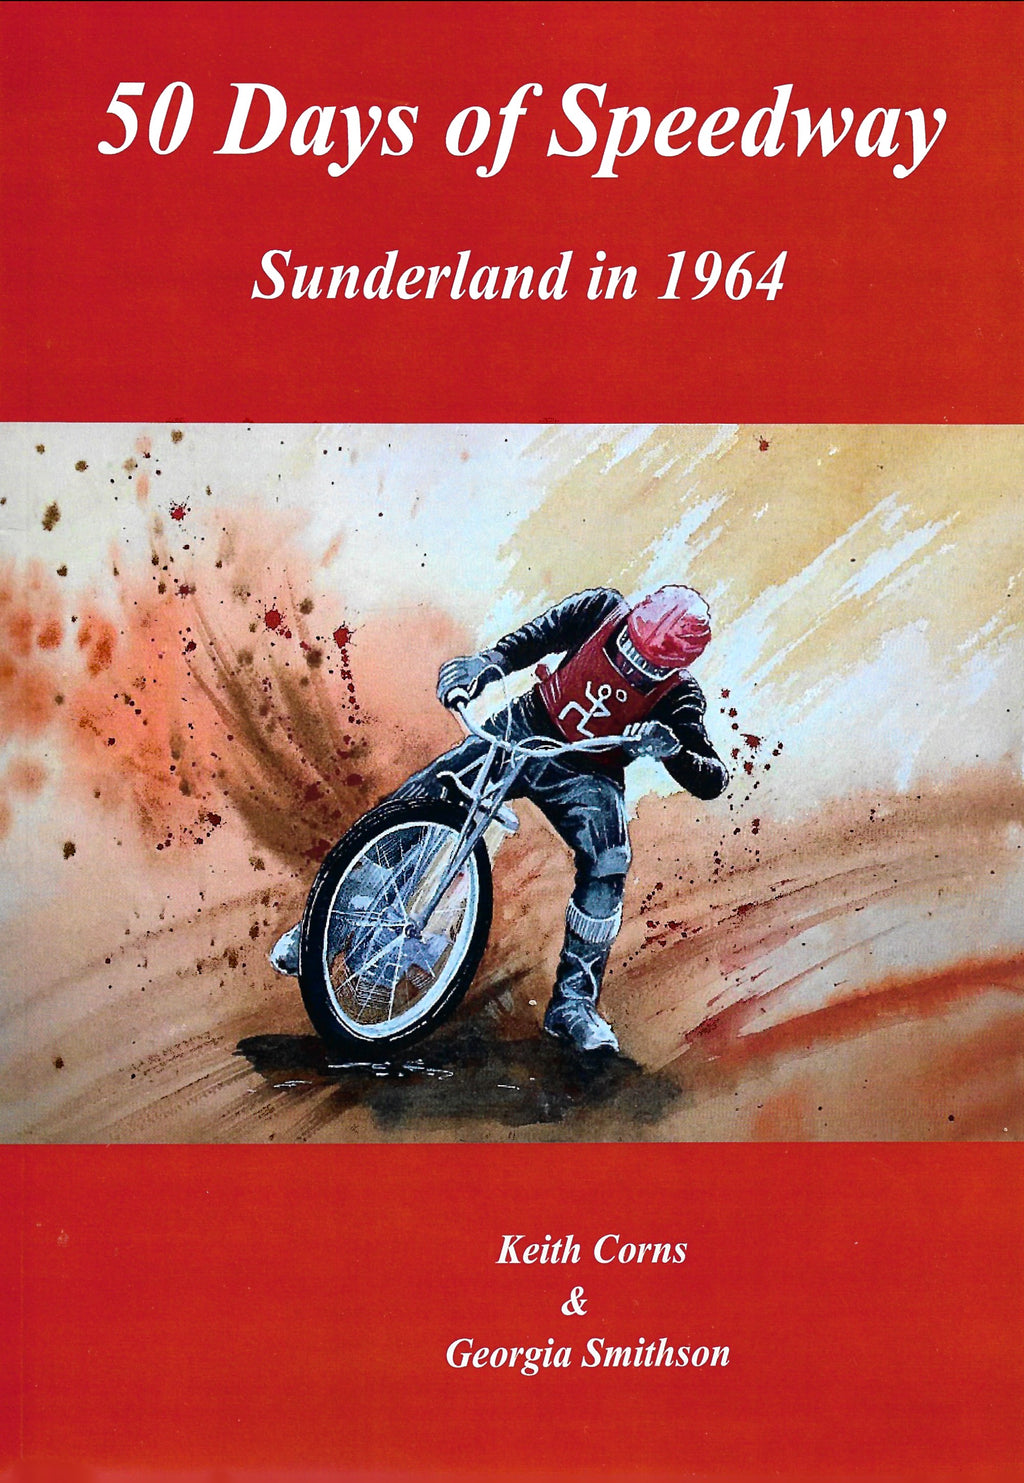 50 Days of Speedway, Sunderland in 1964 - Book by Keith Corns & Georgia Smithson